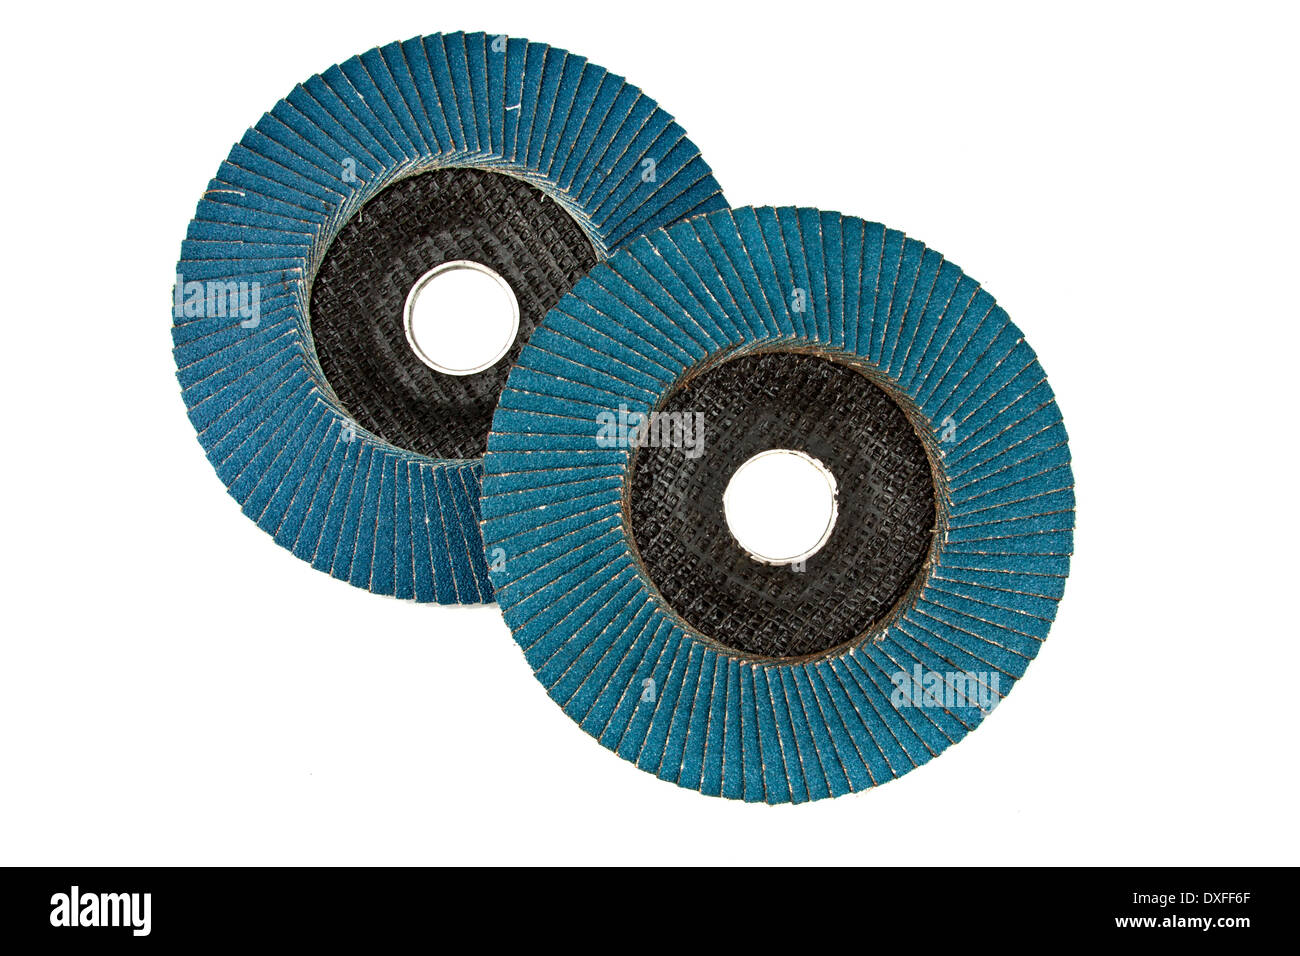 Abrasive disks on a white background Stock Photo